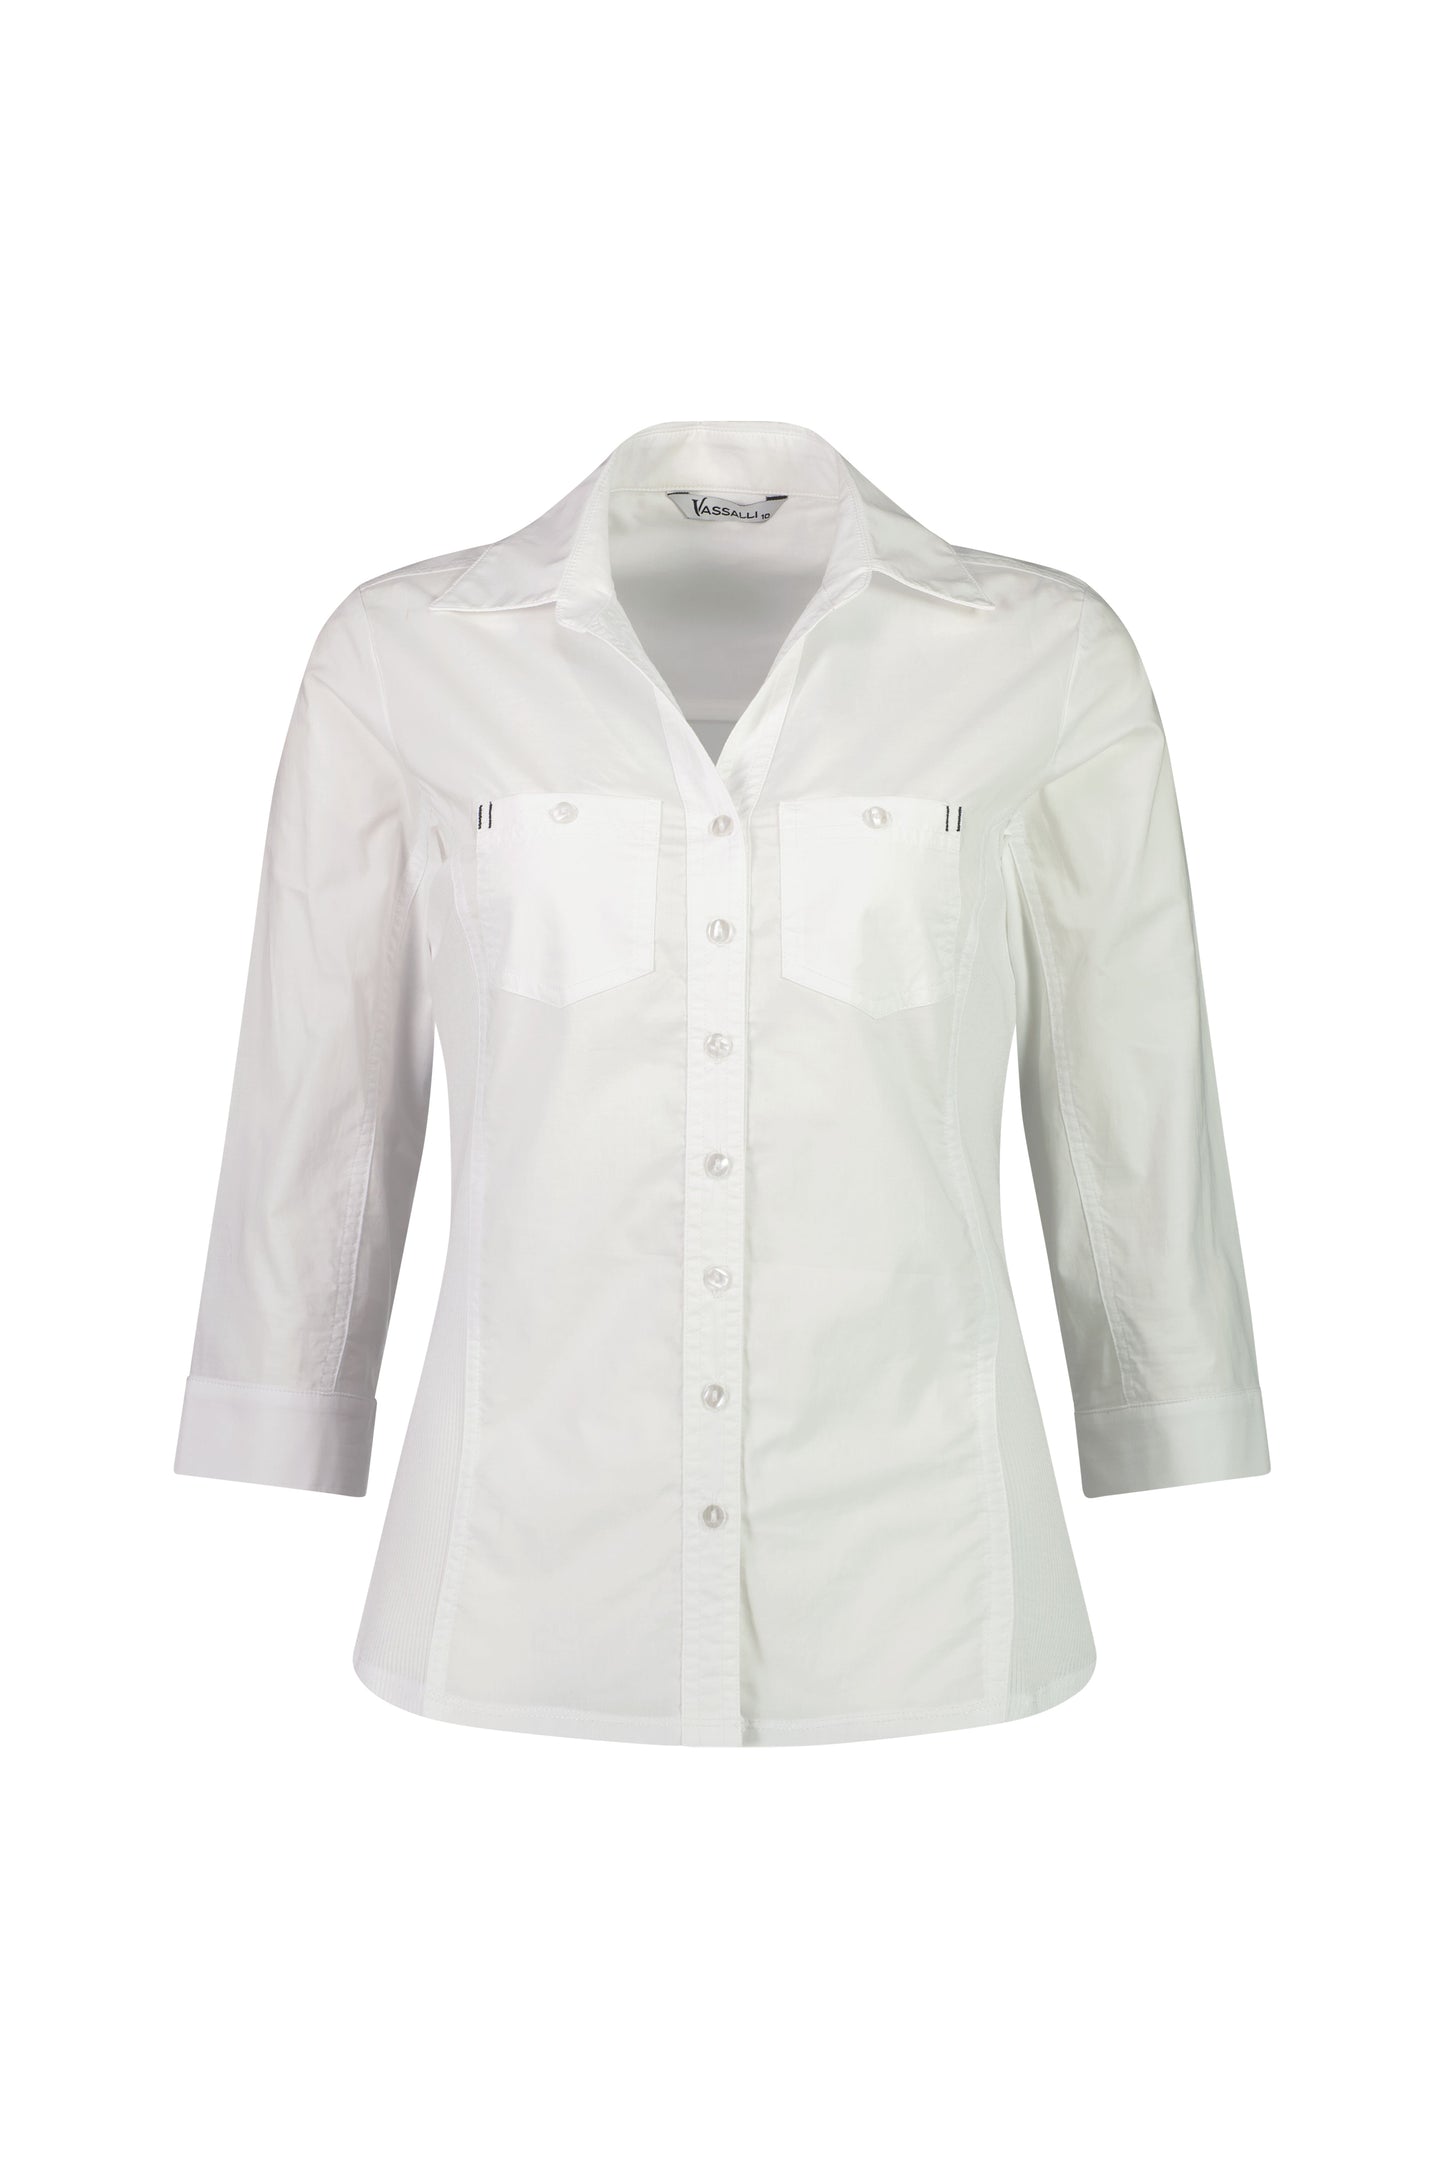 White Plain Button Up Shirt